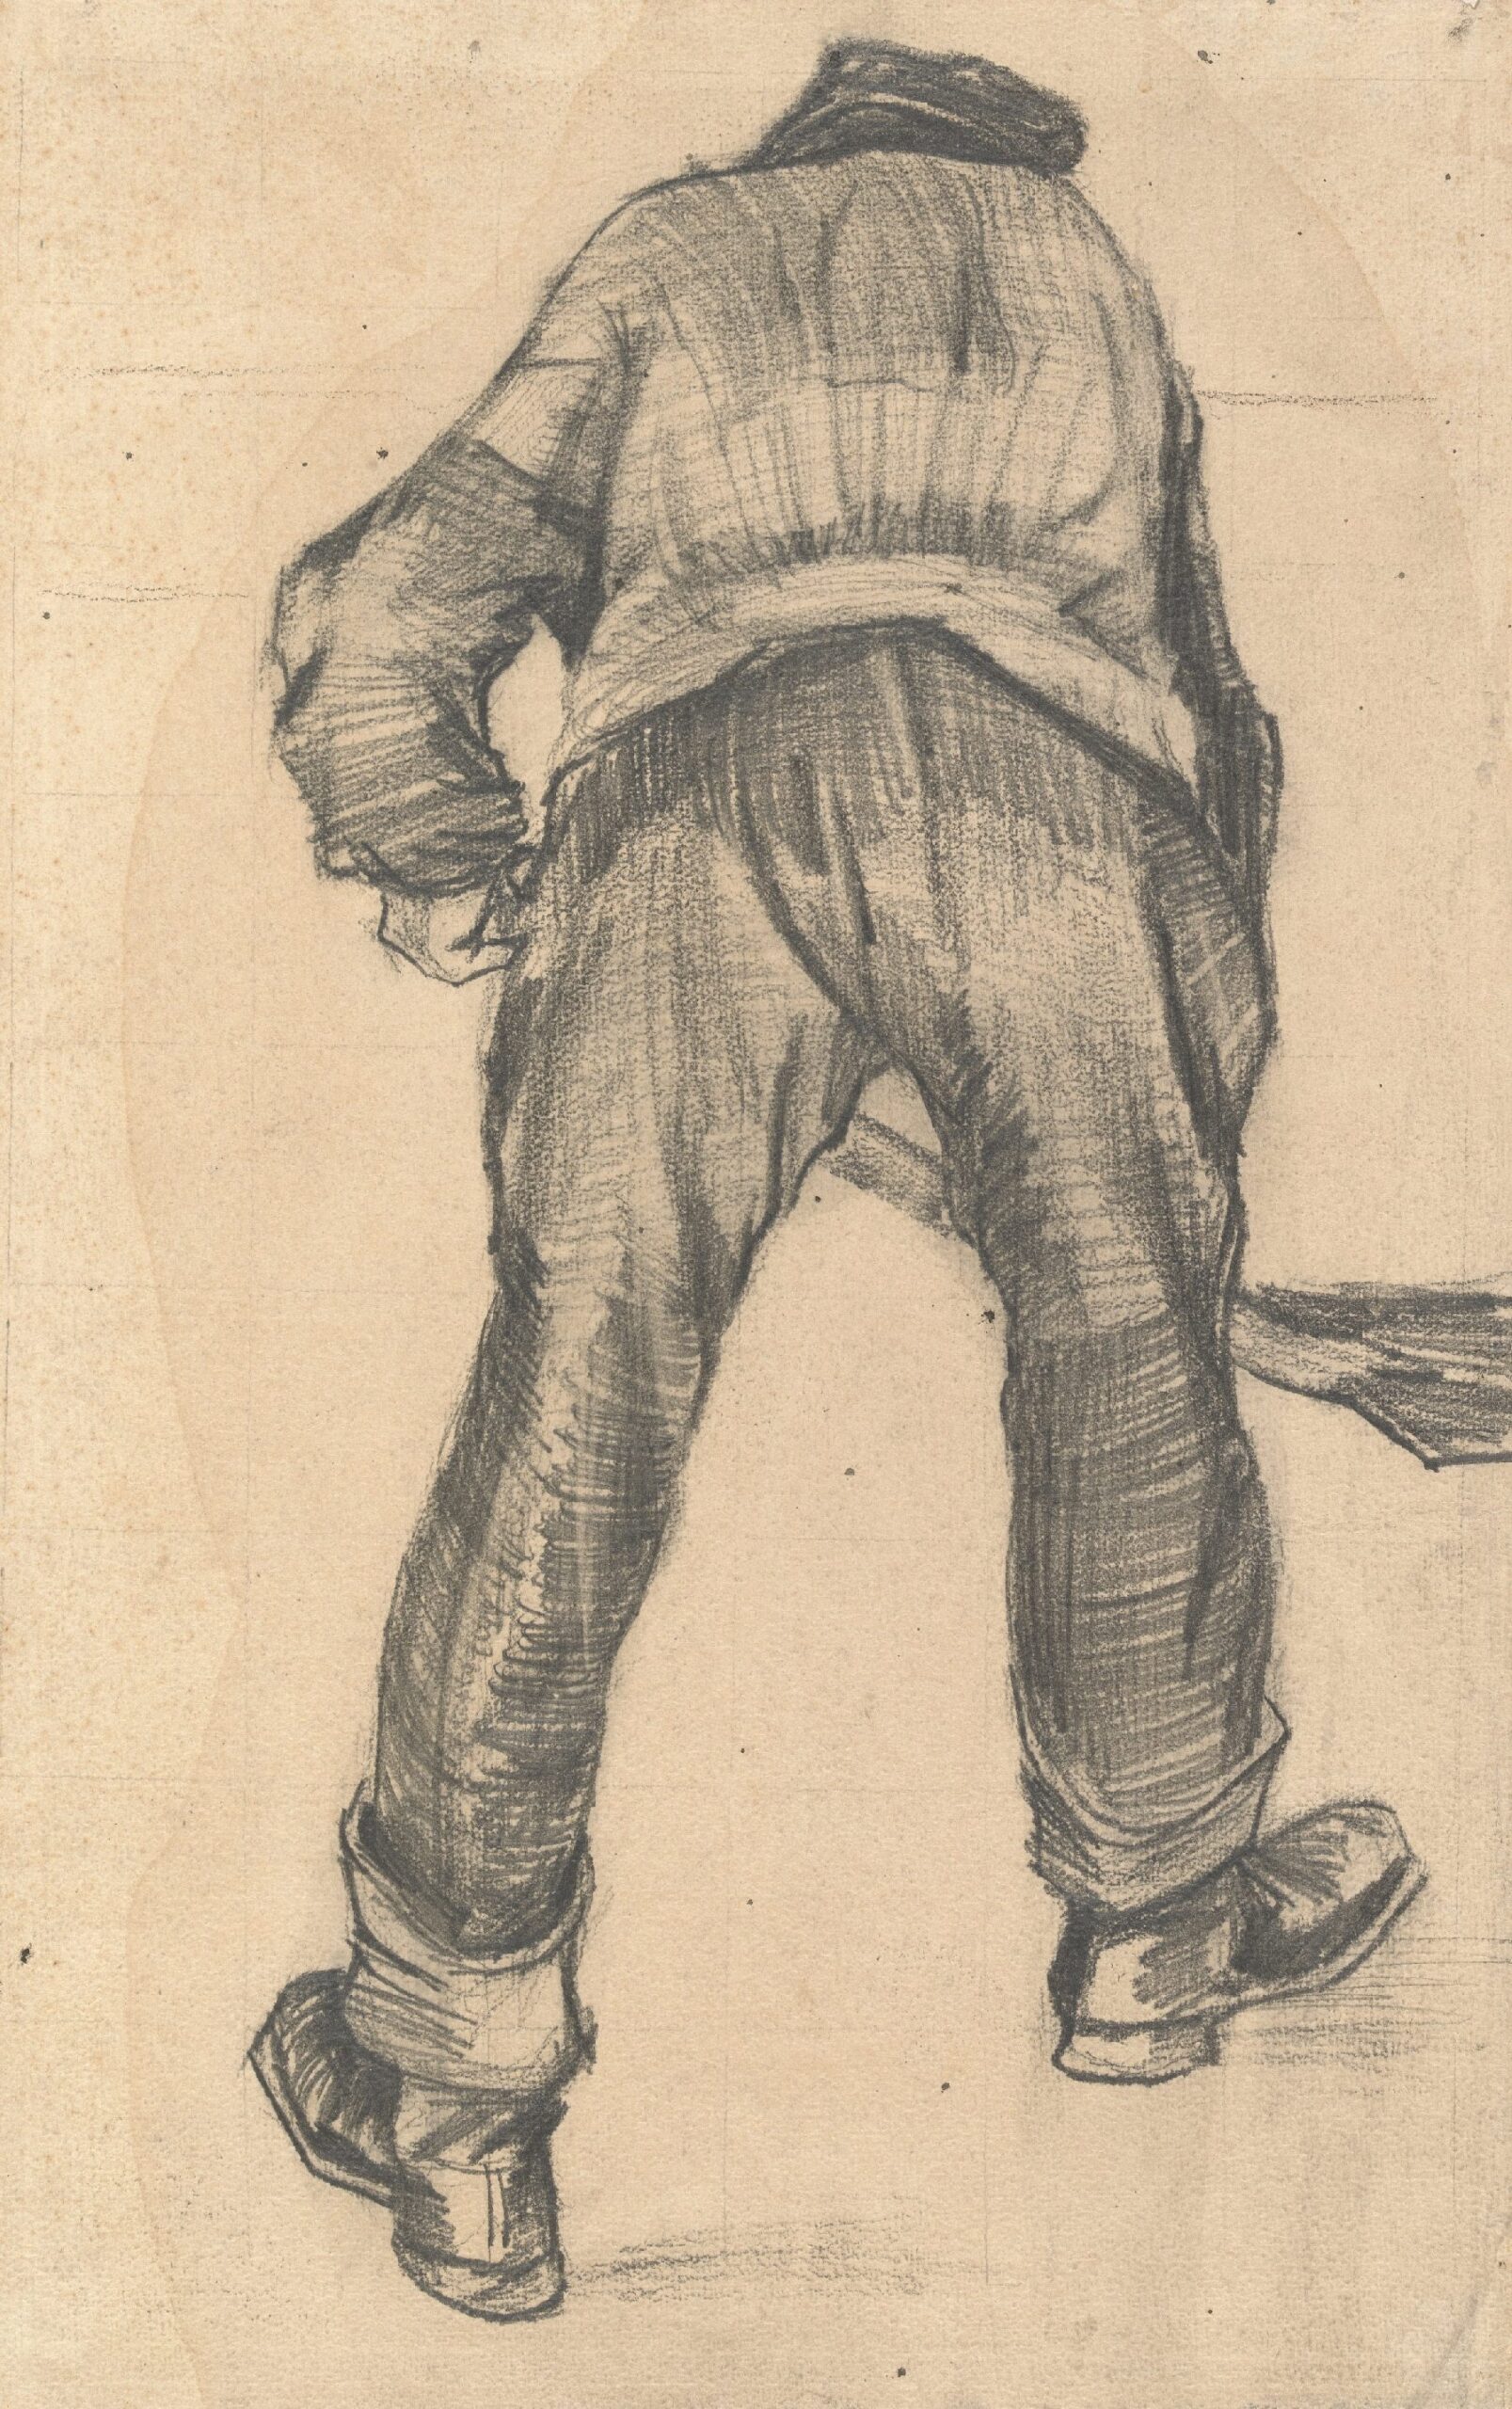 Spitter Vincent van Gogh (1853 - 1890), Den Haag, november 1882